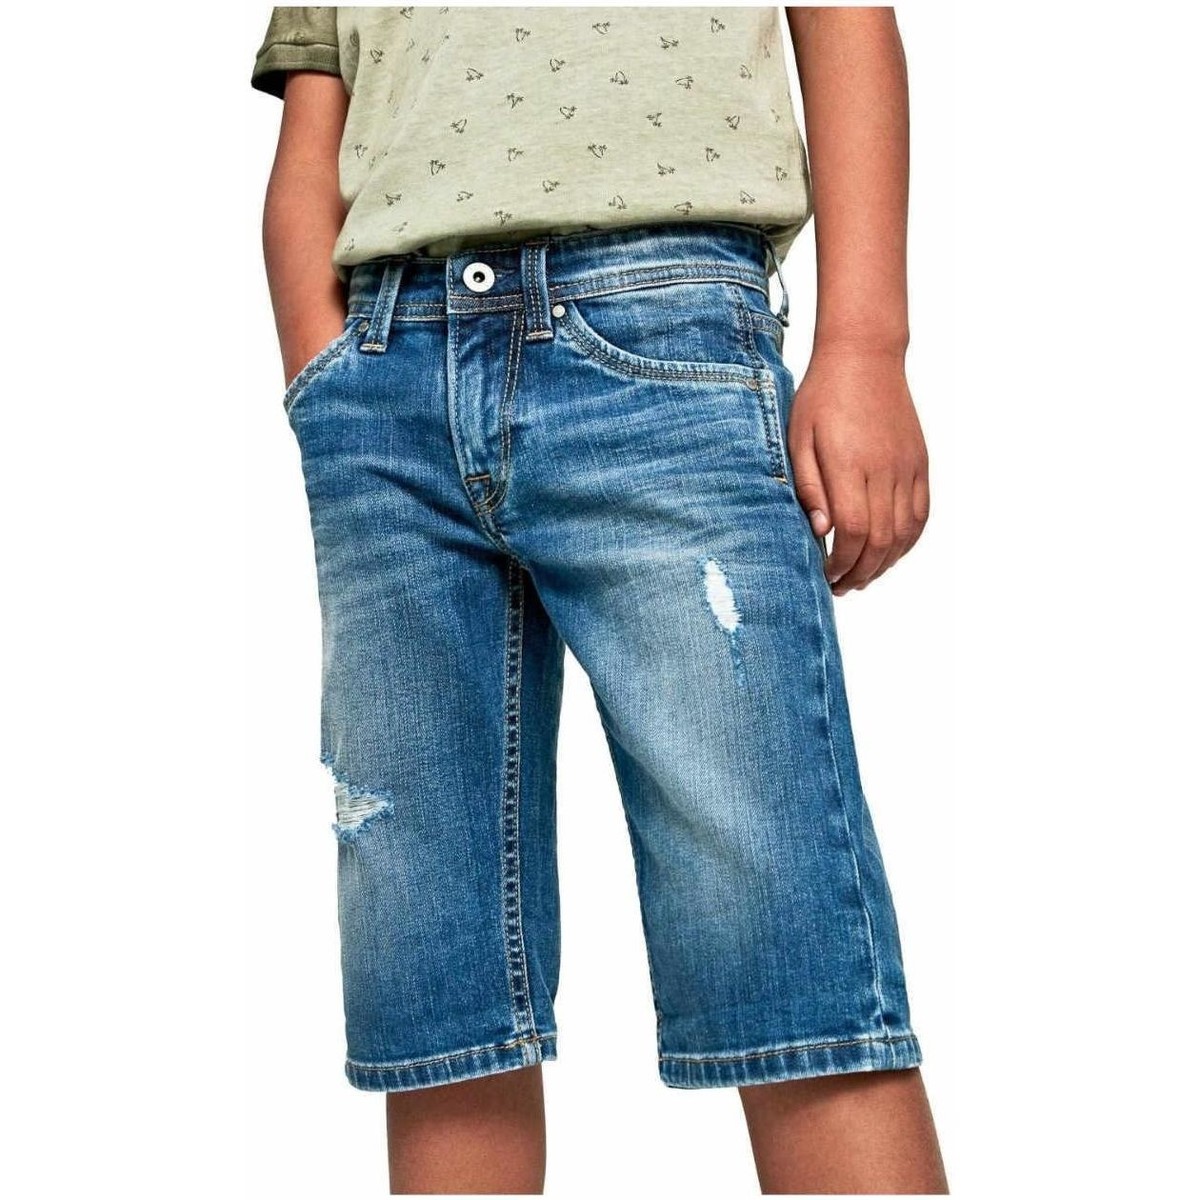 textil Dreng Shorts Pepe jeans  Blå